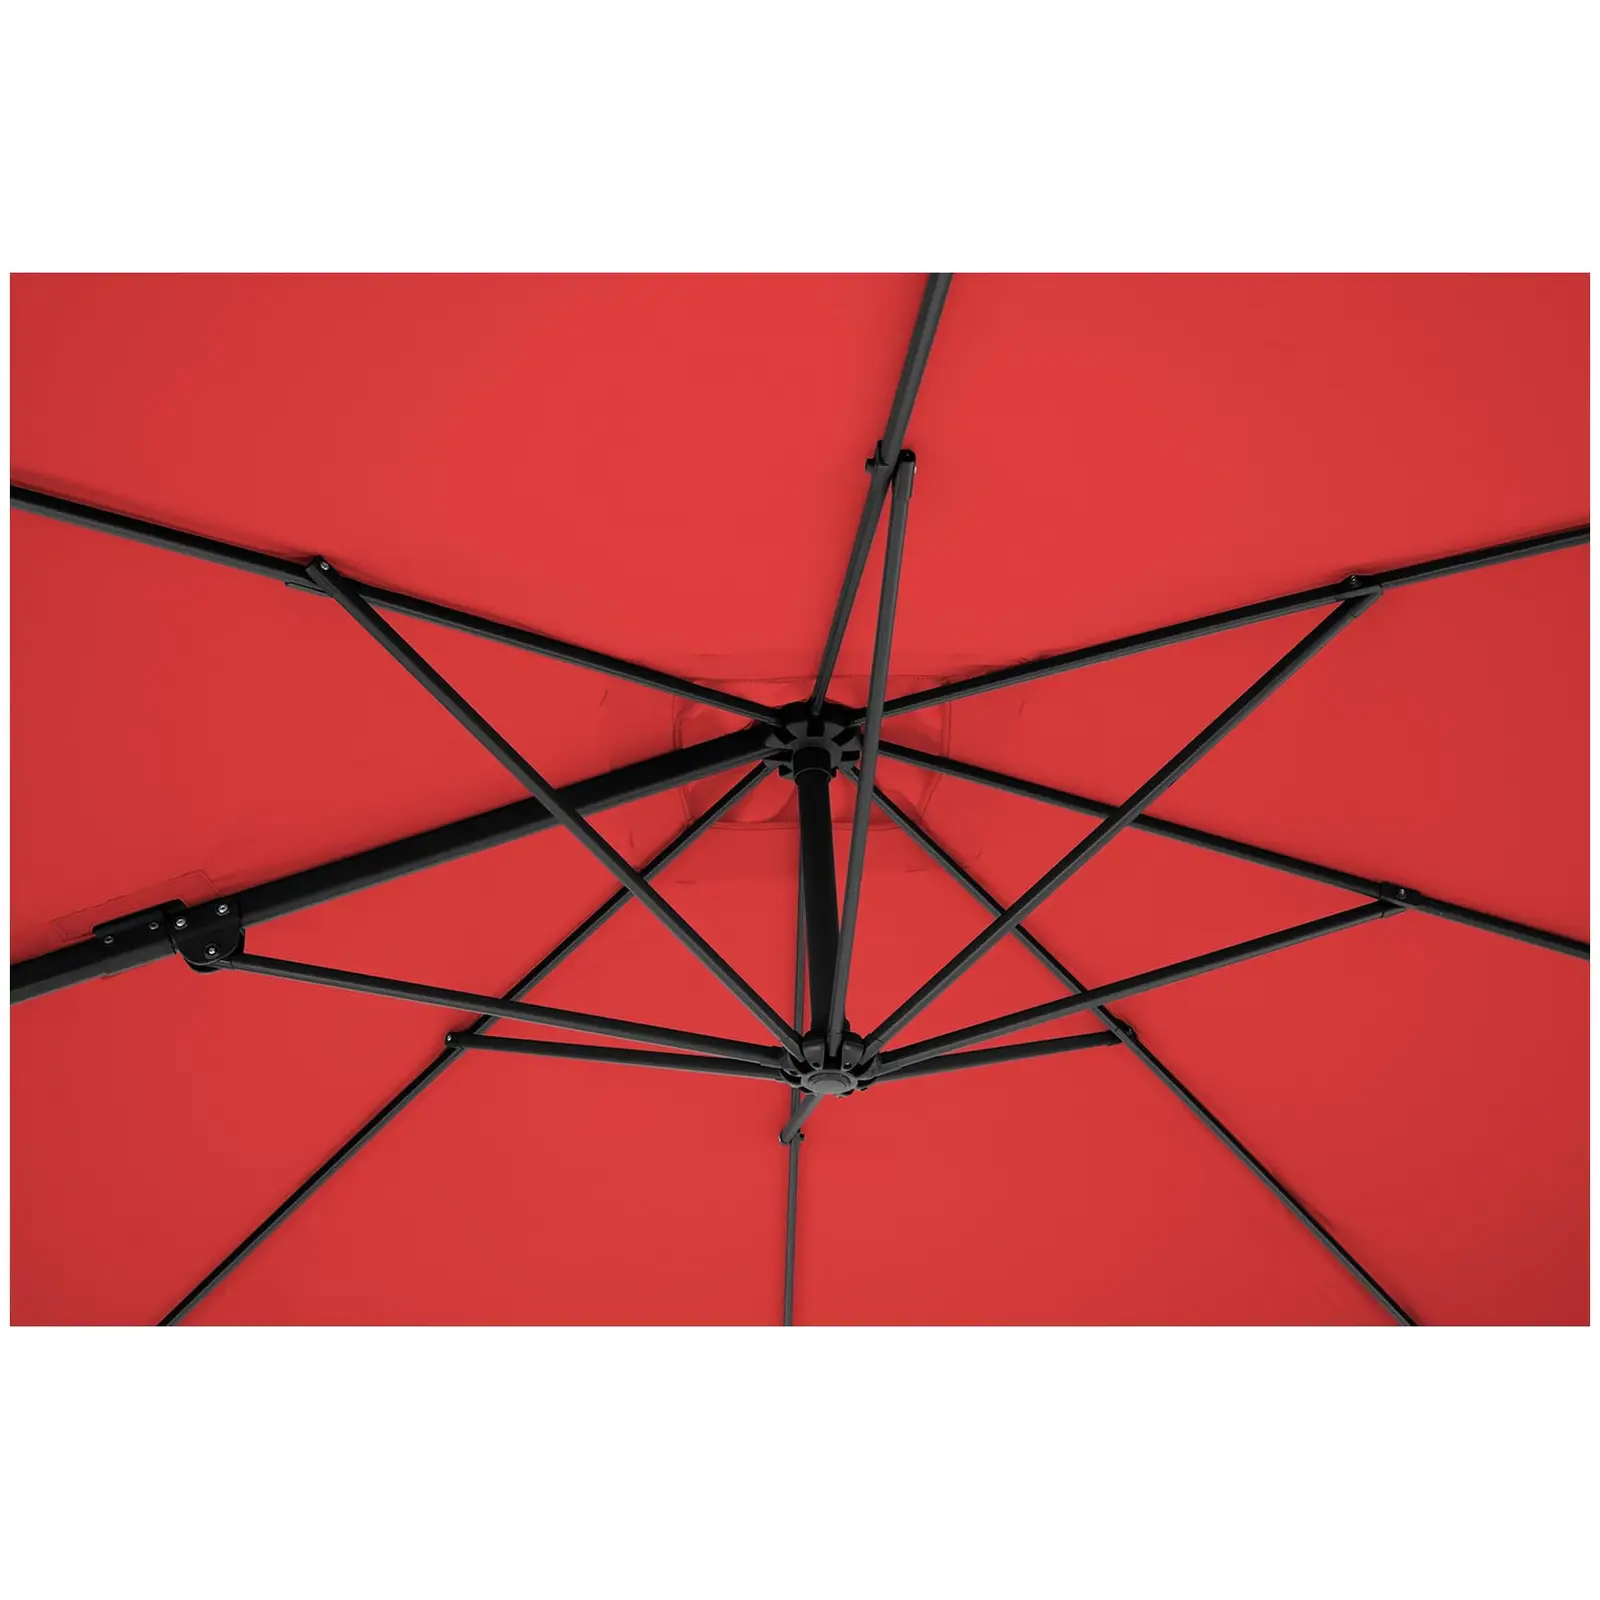 Tweedehands Zweefparasol - rood - vierkant - 250 x 250 cm - draaibaar